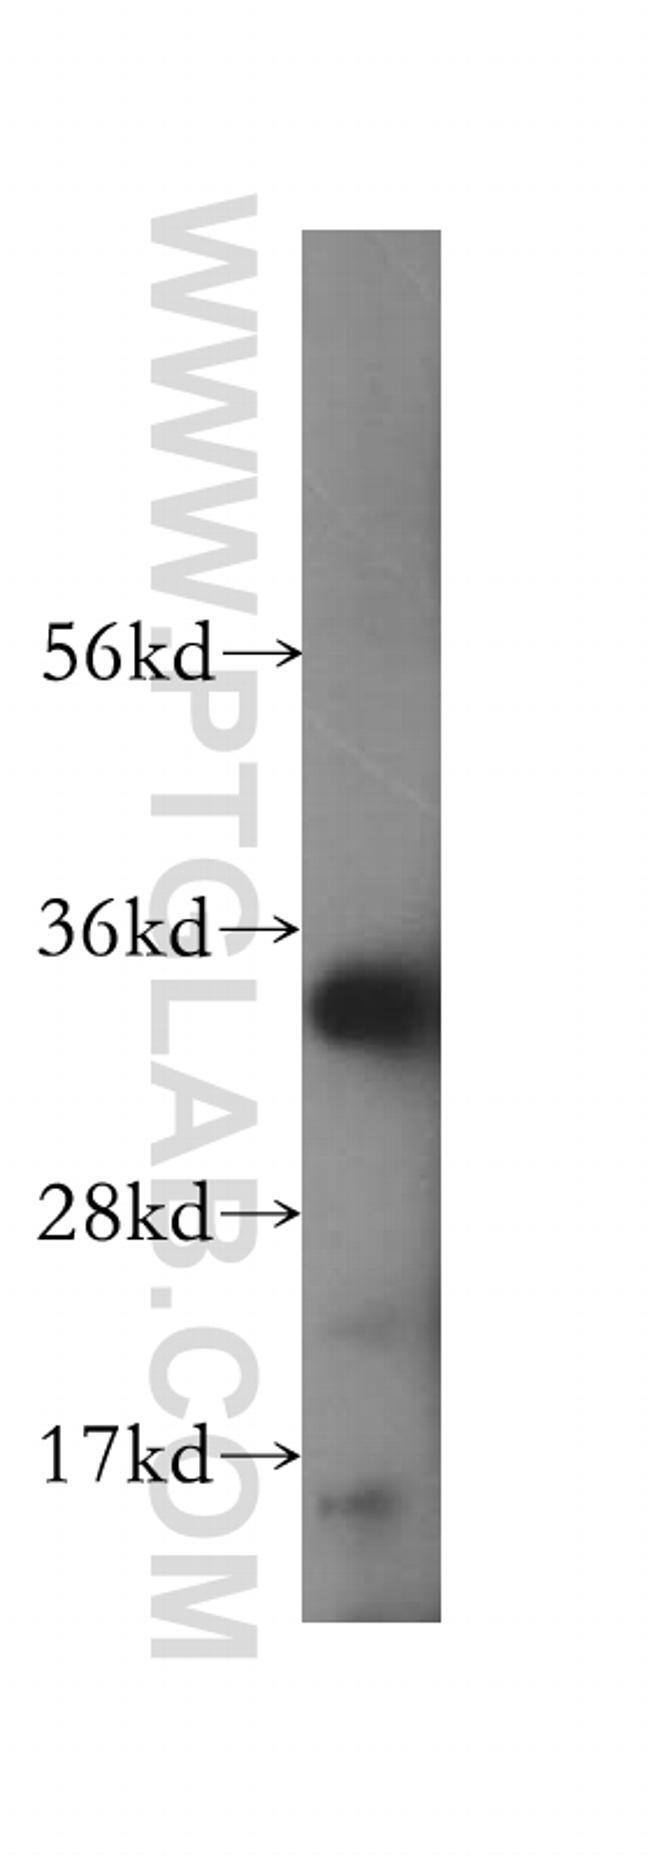 HSD17B11 Antibody in Western Blot (WB)